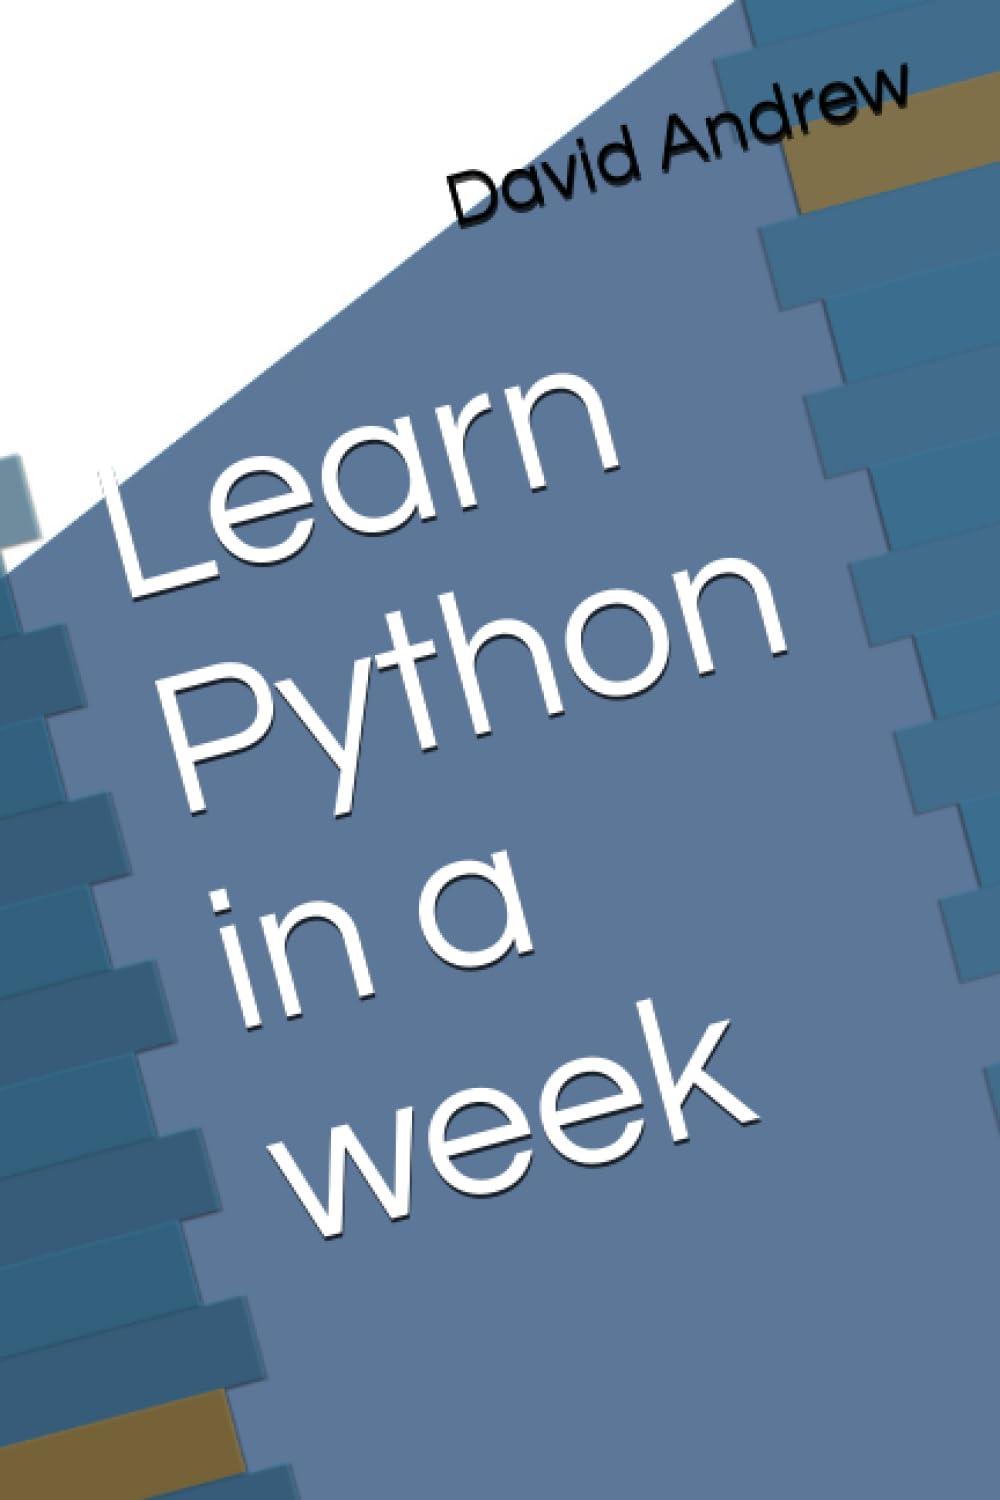 learn python in a week 1st edition david andrew b0c9sf8lq1, 979-8851948442